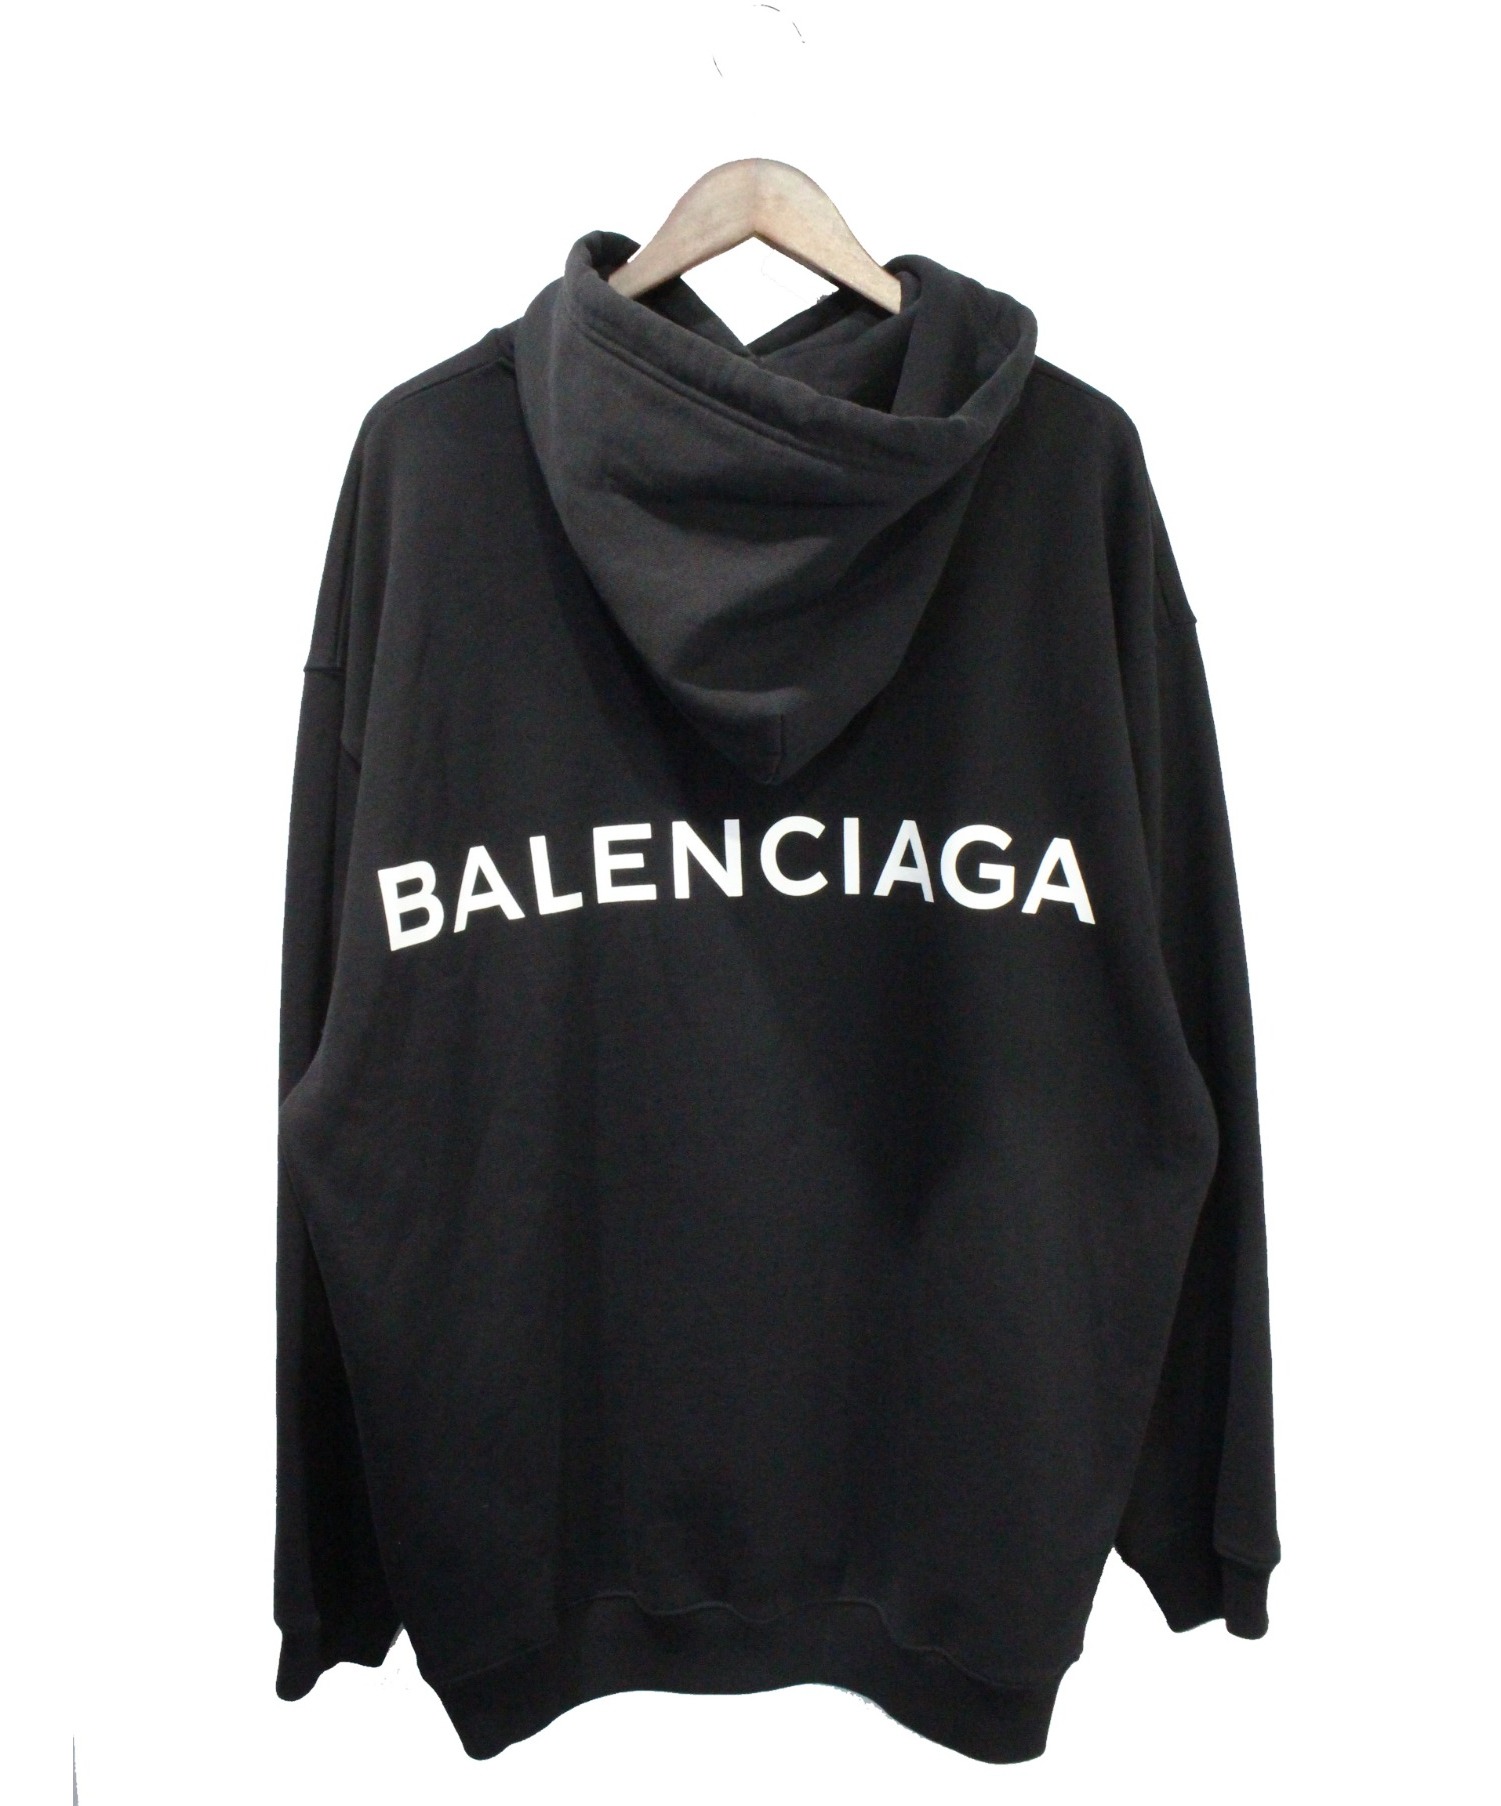 BALENCIAGA (バレンシアガ) パーカー ブラック サイズ:M